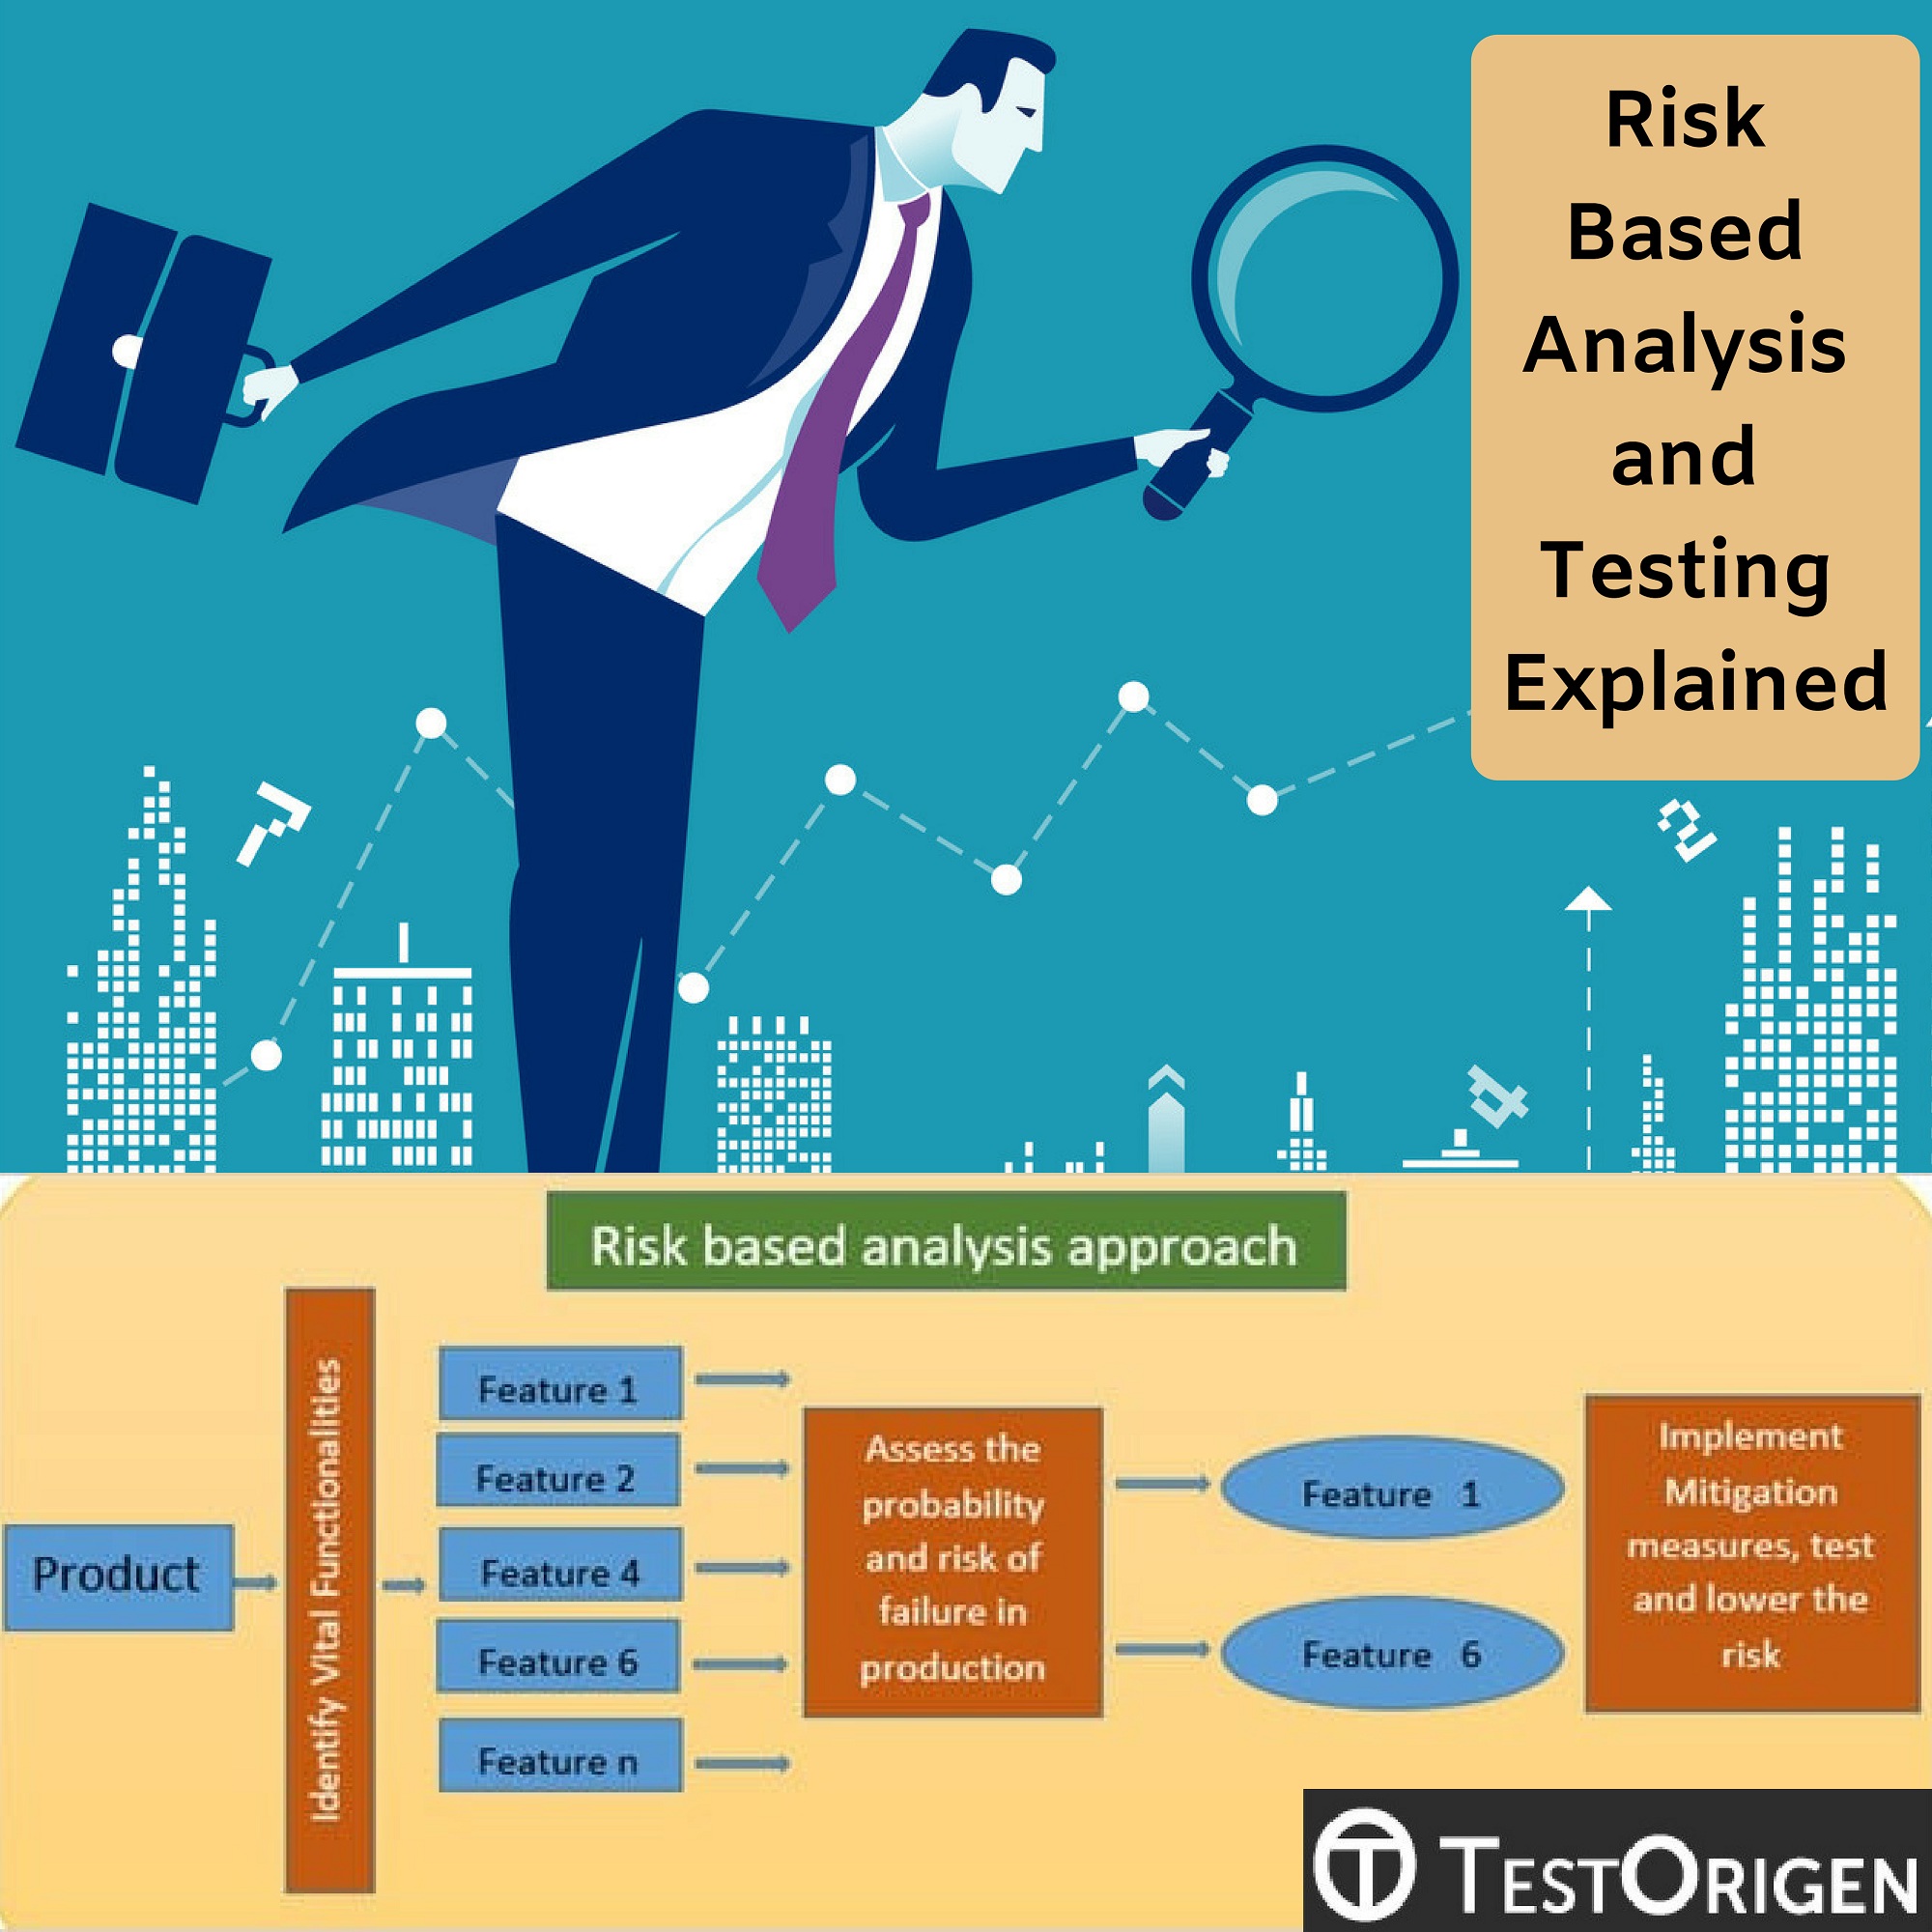 Risk Based Analysis and Testing Explained